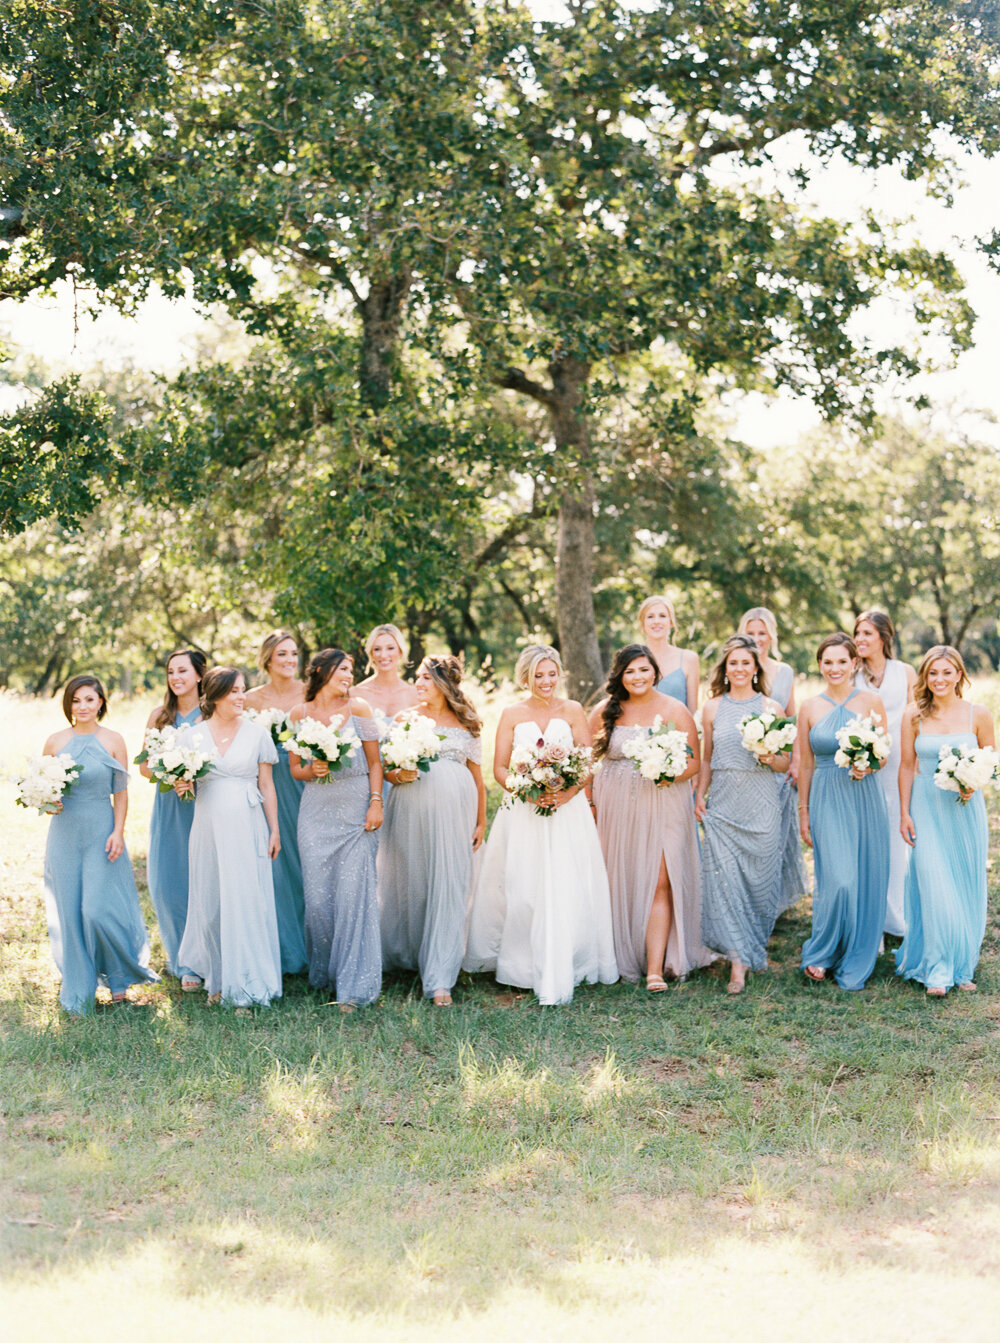 Dusty Blue Bridesmaids Dresses, Fredericksburg Wedding by Courtney Leigh Photography, a Fine Art Film Photographer based in Houston, TX 